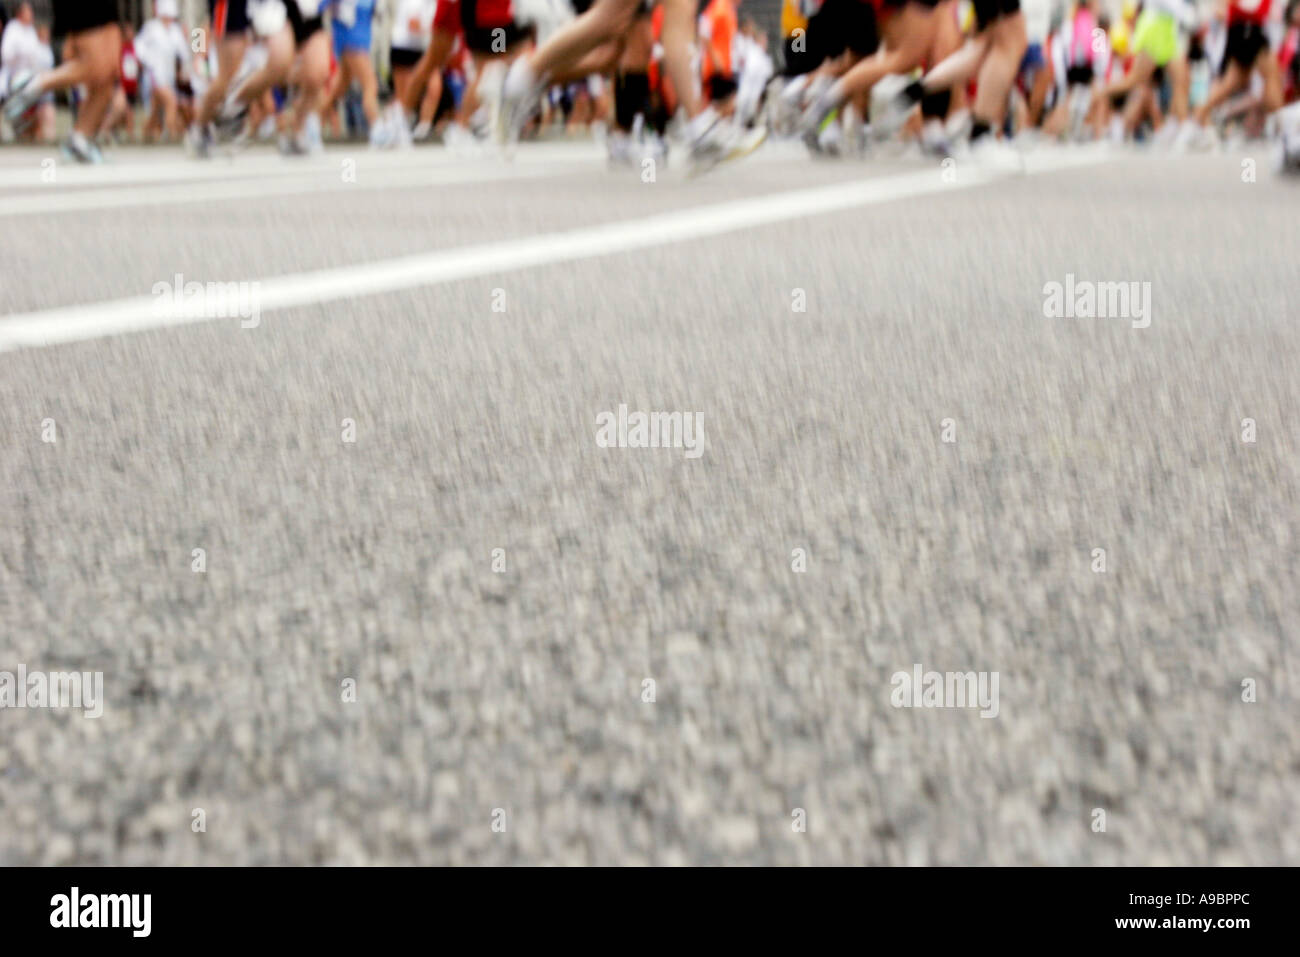 Runners during the Chicago marathon Stock Photo